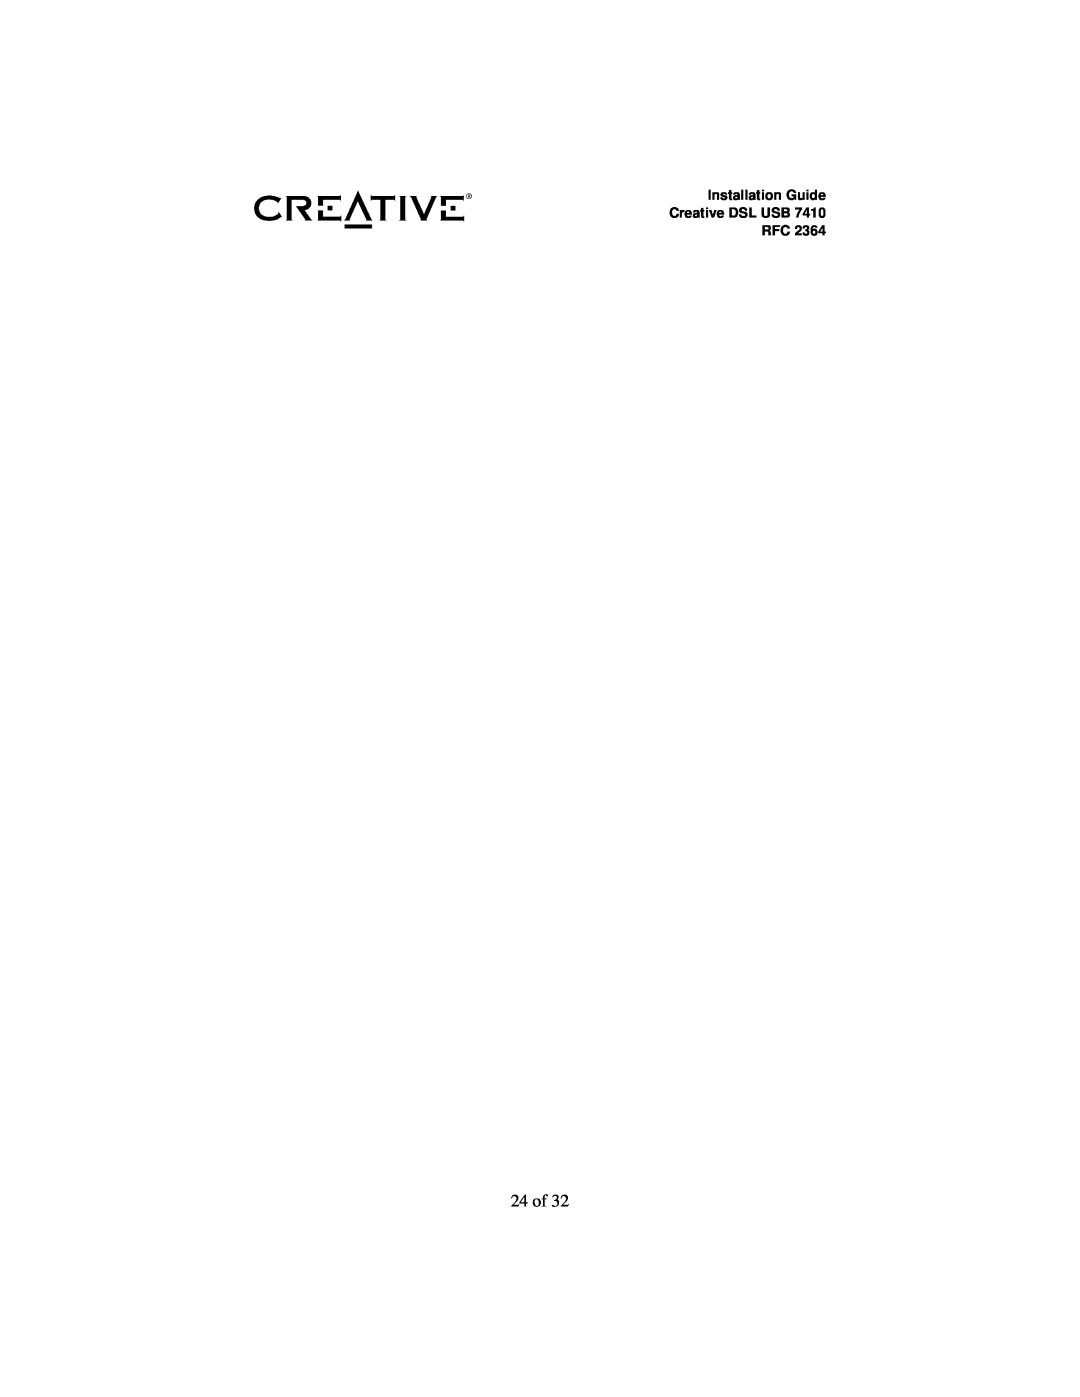 Creative RFC 2364 appendix 24 of, Installation Guide Creative DSL USB RFC 